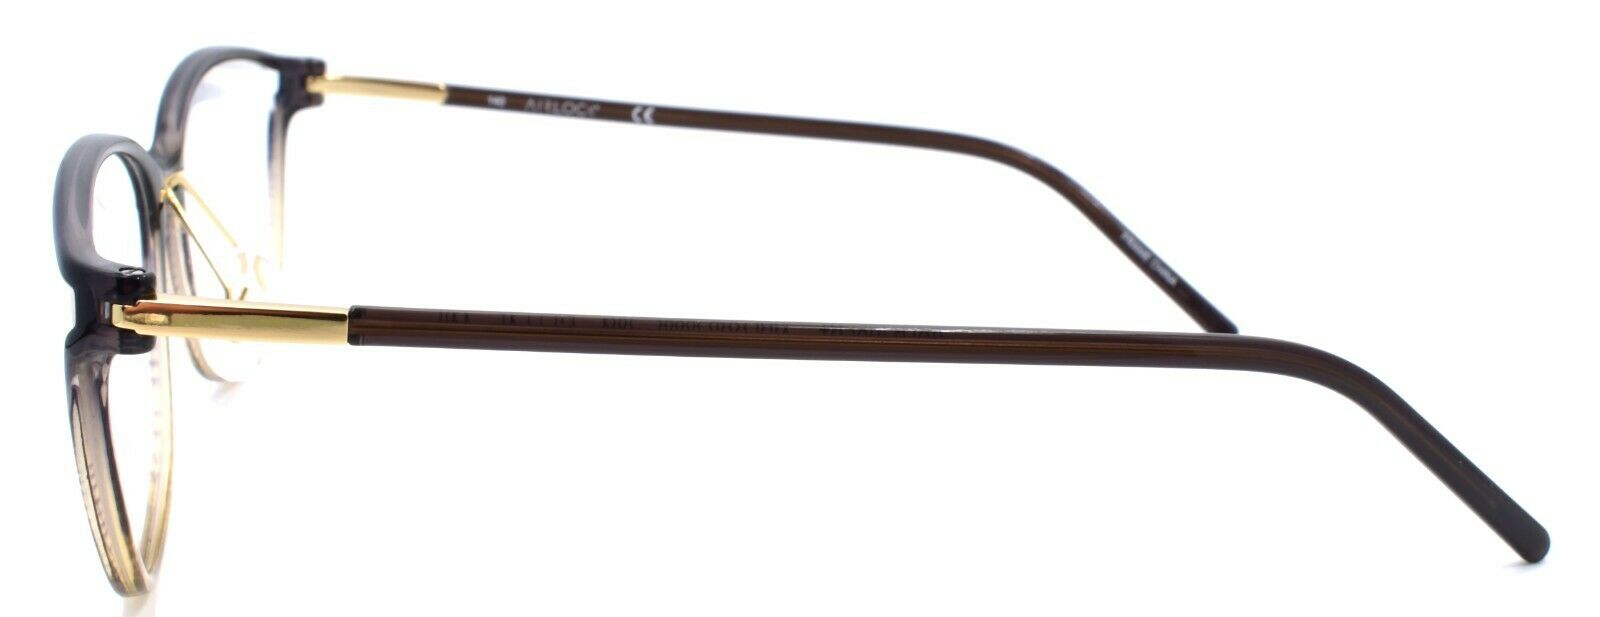 3-Marchon Airlock 3000 001 Women's Eyeglasses Frames 53-15-140 Black Gradient-886895394161-IKSpecs